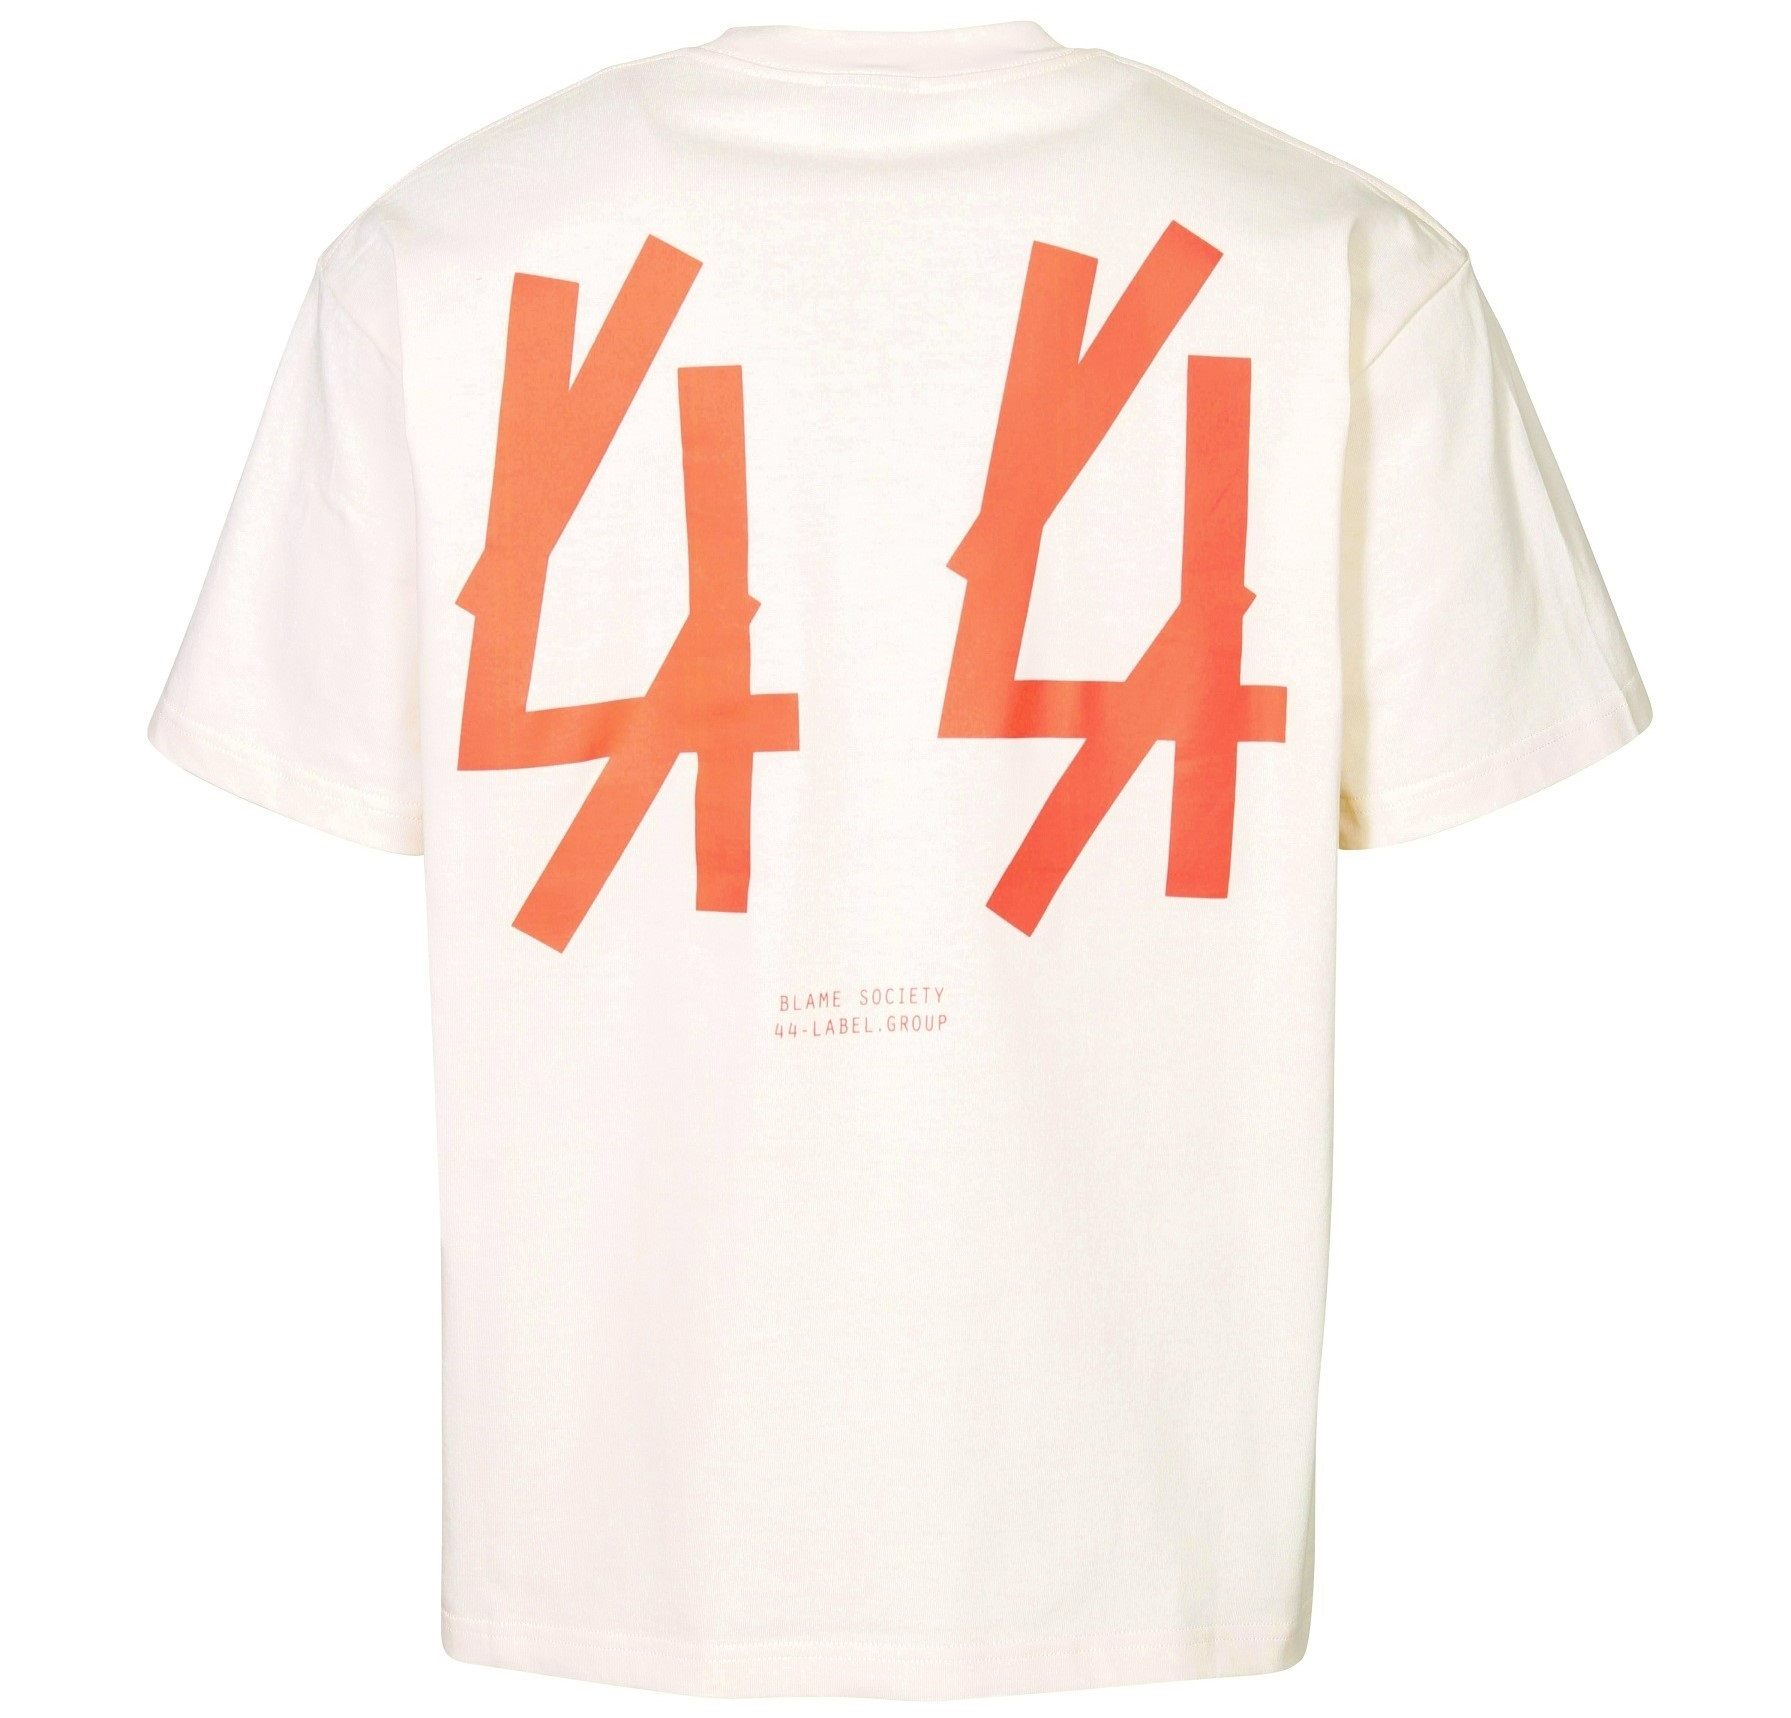 44 LABEL GROUP Original T-Shirt in Bones/Neon Print 3XL